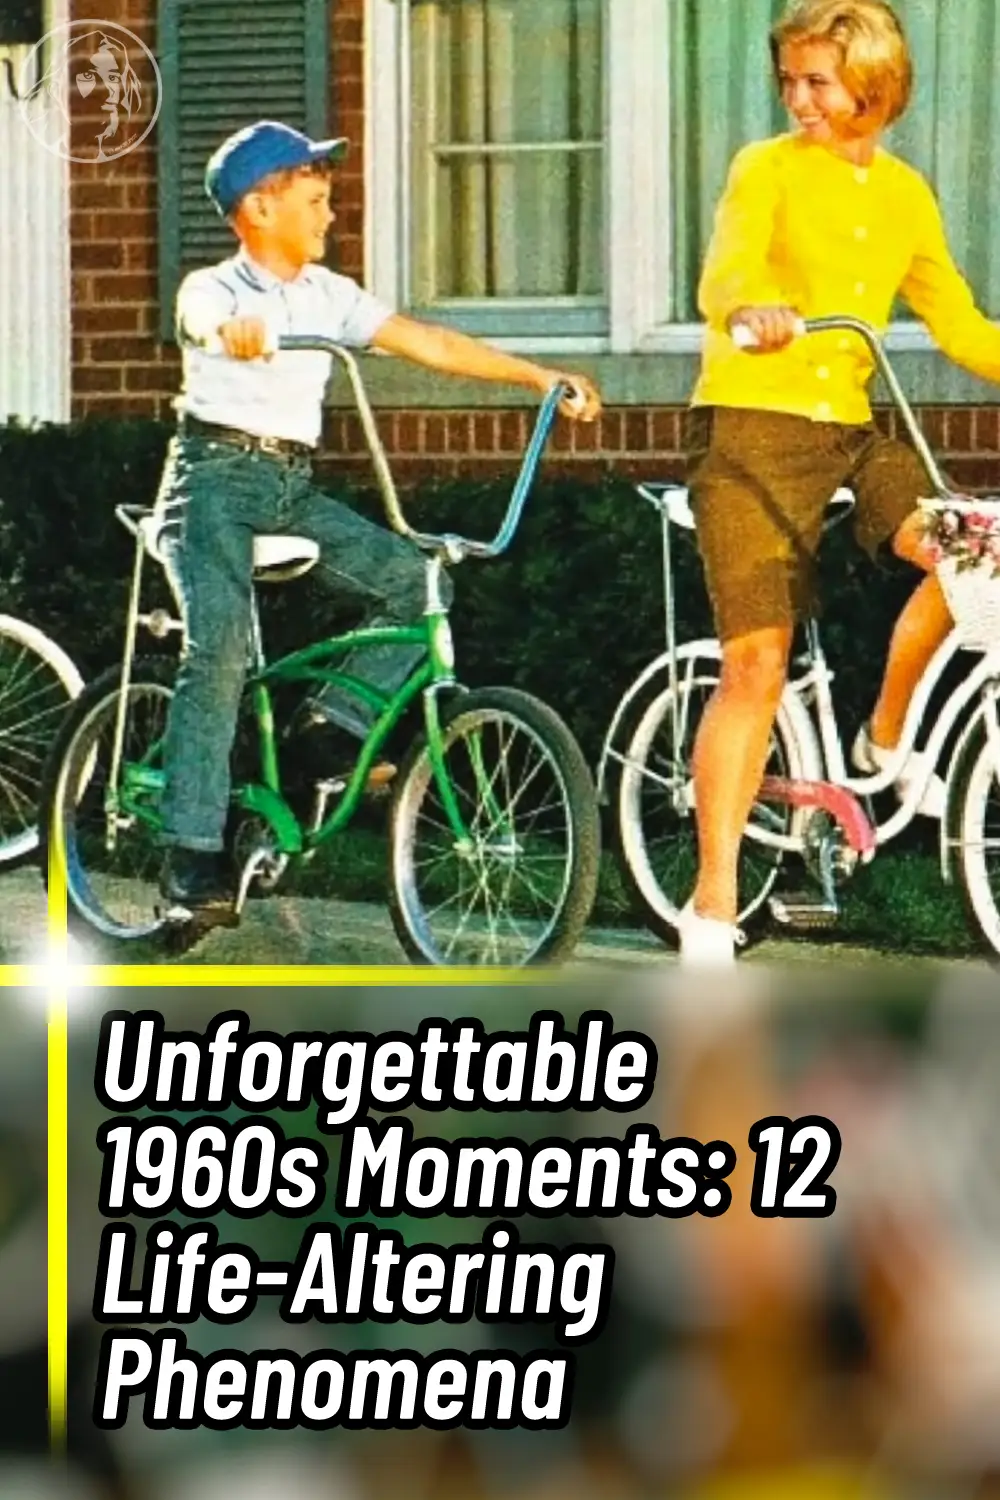 Unforgettable 1960s Moments: 12 Life-Altering Phenomena